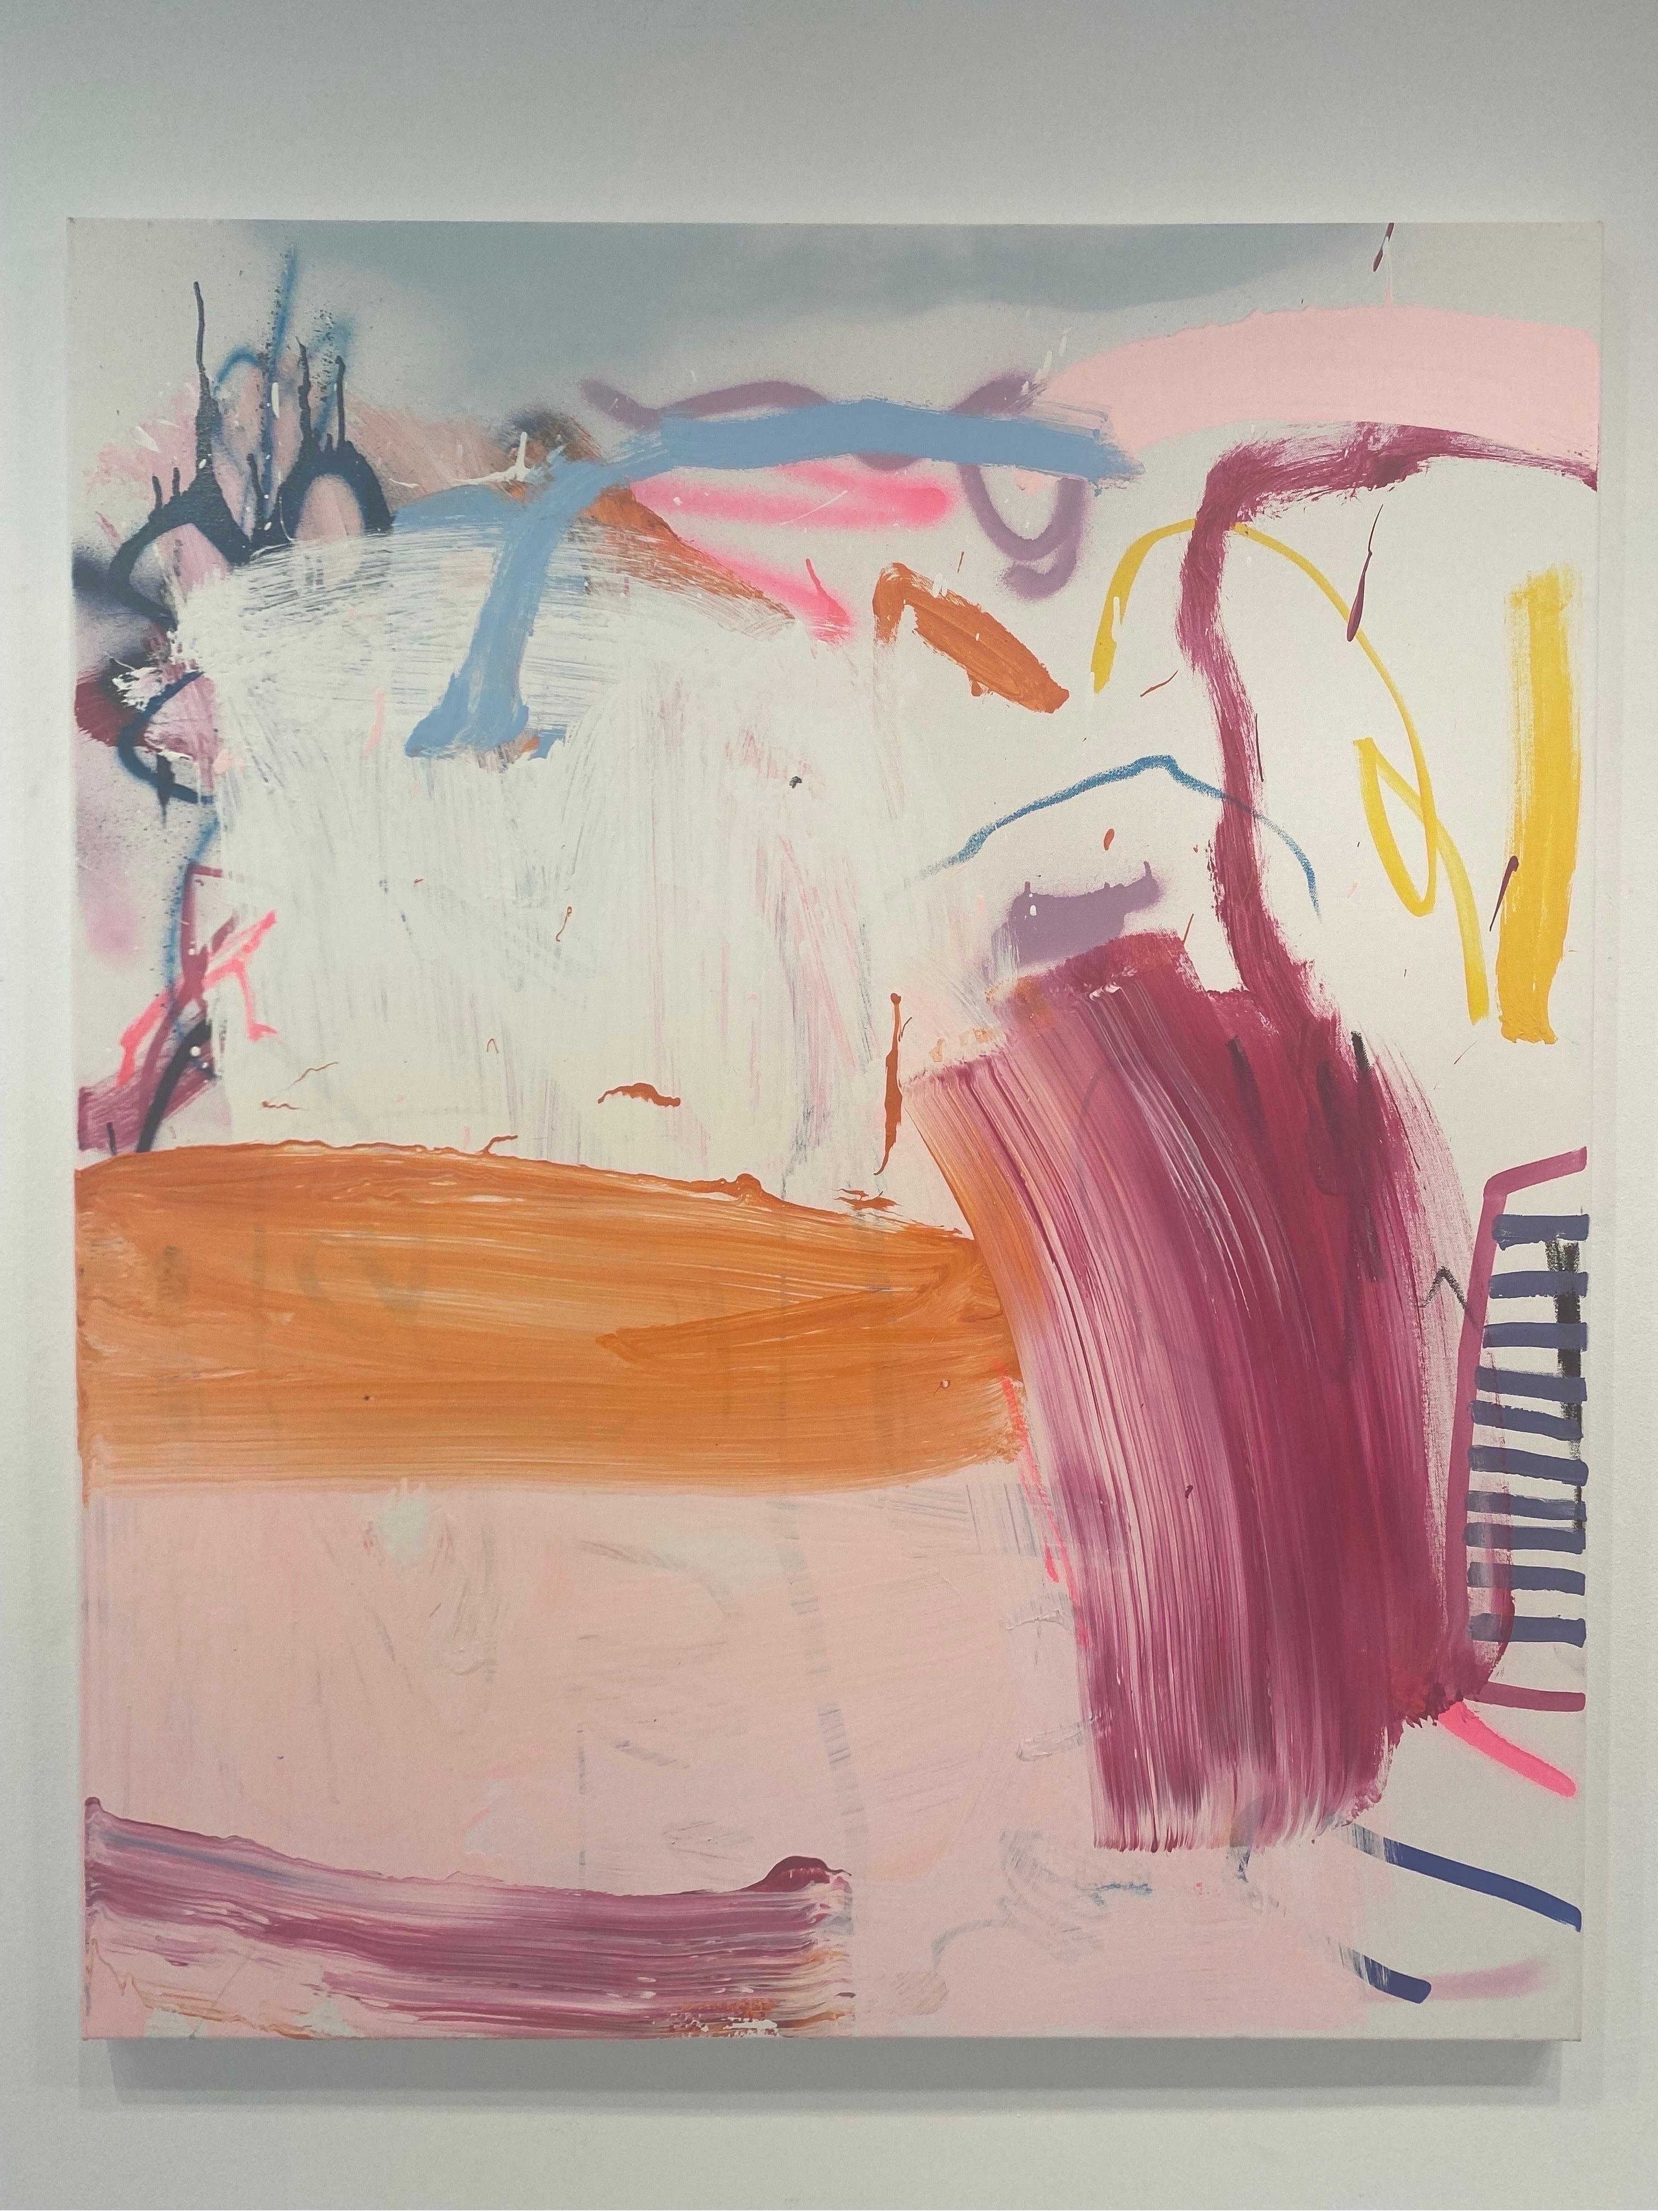 Bright Times Ahead - Manuela Karin Knaut Abstract Painting 1